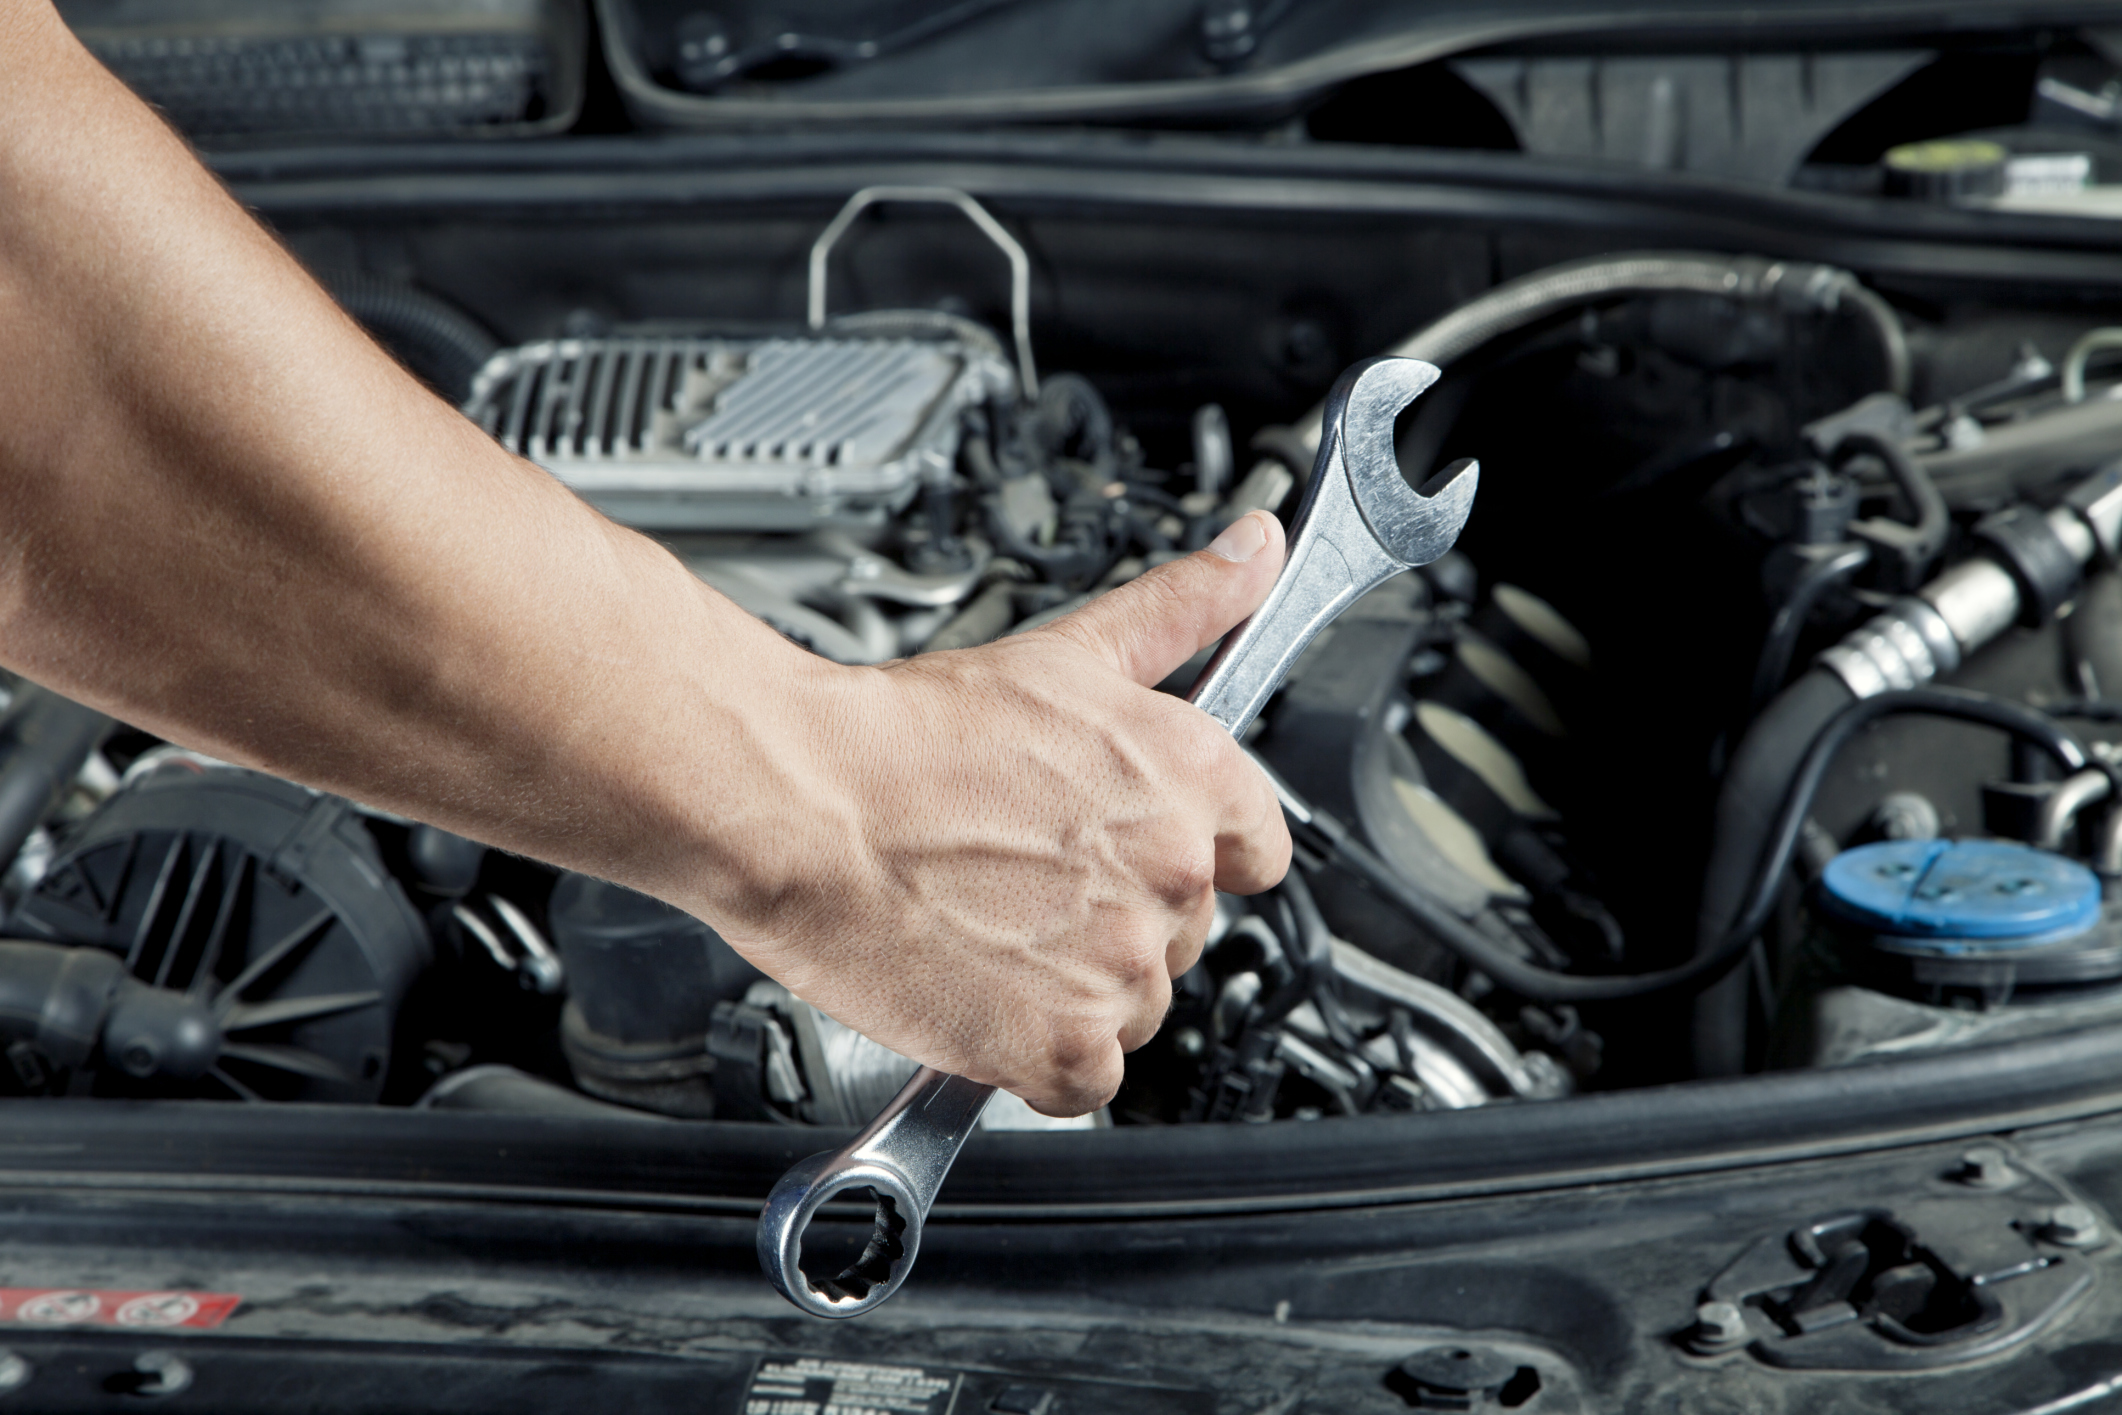 Auto Repair & Maintenance